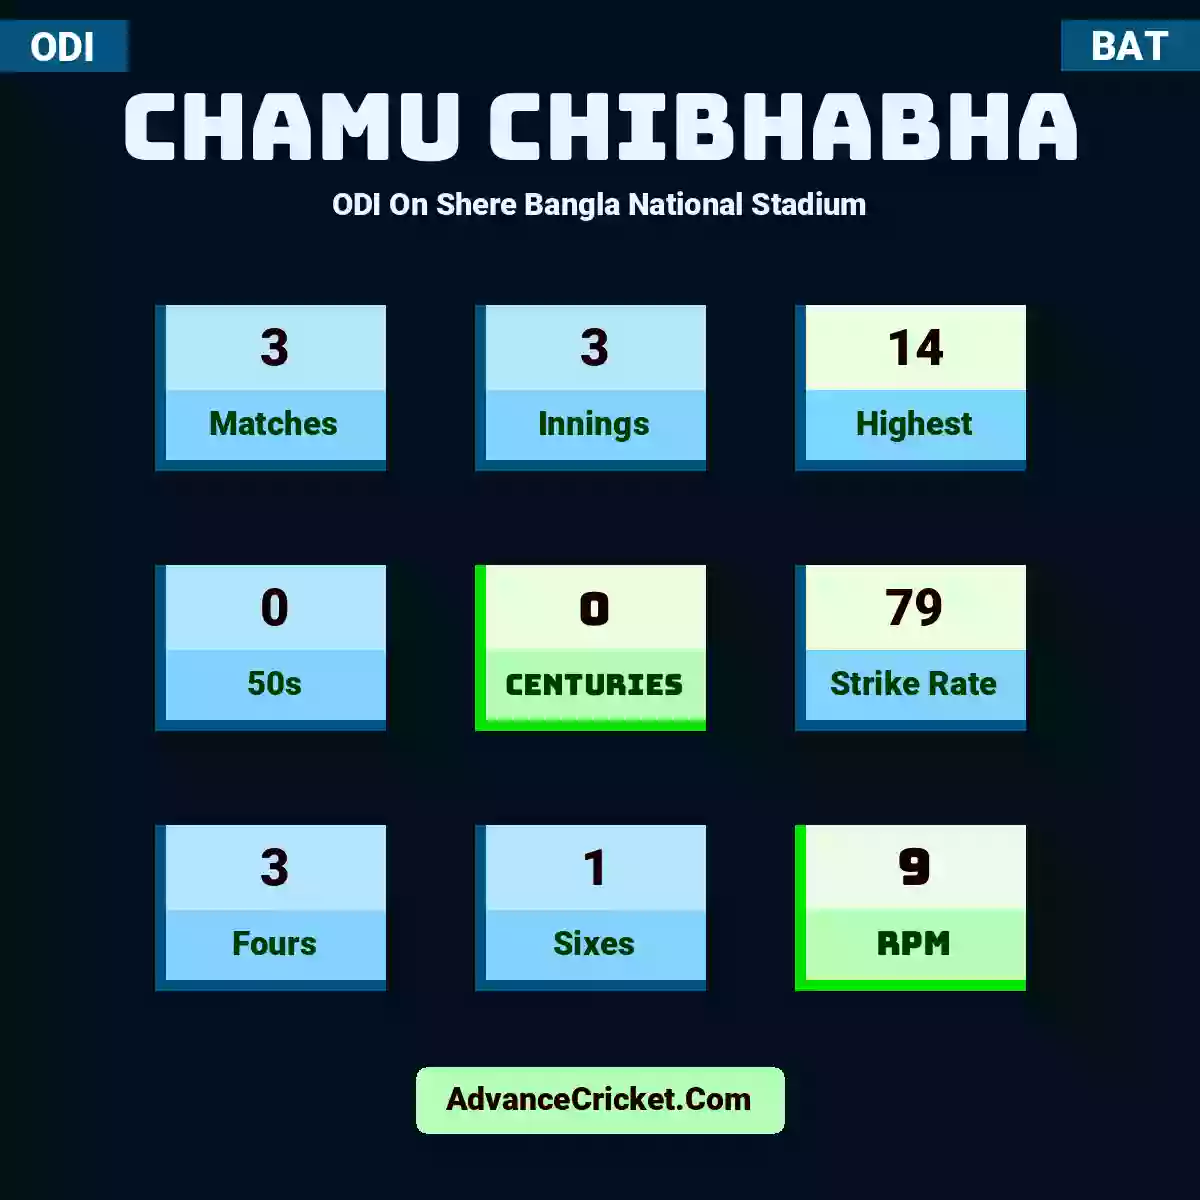 Chamu Chibhabha ODI  On Shere Bangla National Stadium, Chamu Chibhabha played 3 matches, scored 14 runs as highest, 0 half-centuries, and 0 centuries, with a strike rate of 79. C.Chibhabha hit 3 fours and 1 sixes, with an RPM of 9.